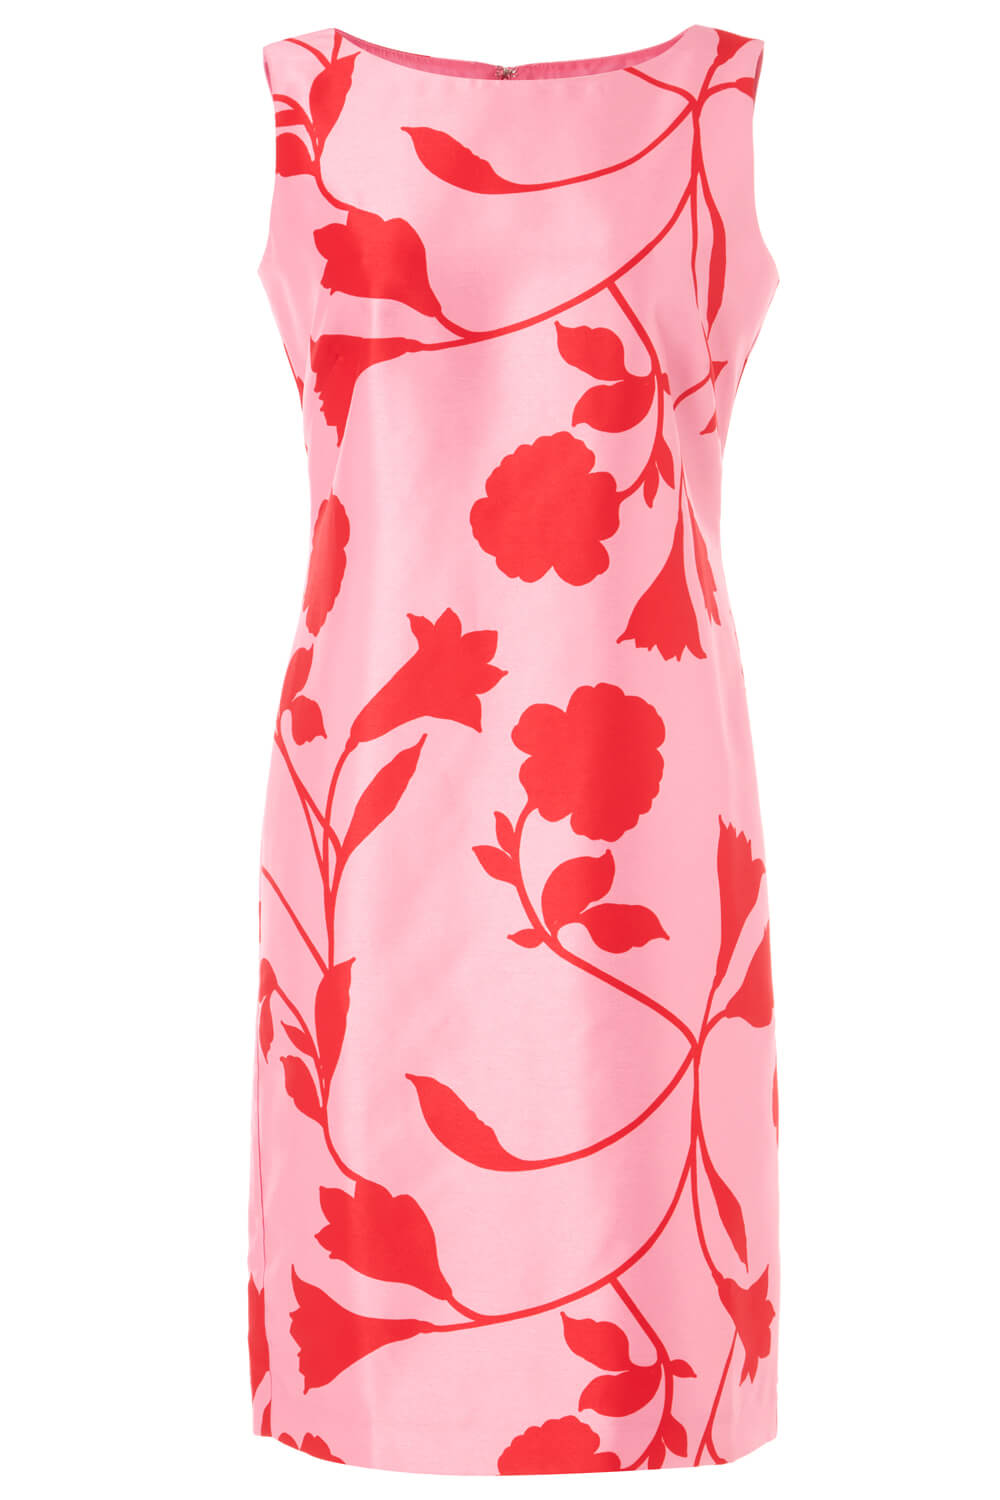 Fuchsia Floral Print Sleeveless Shift Dress, Image 5 of 5